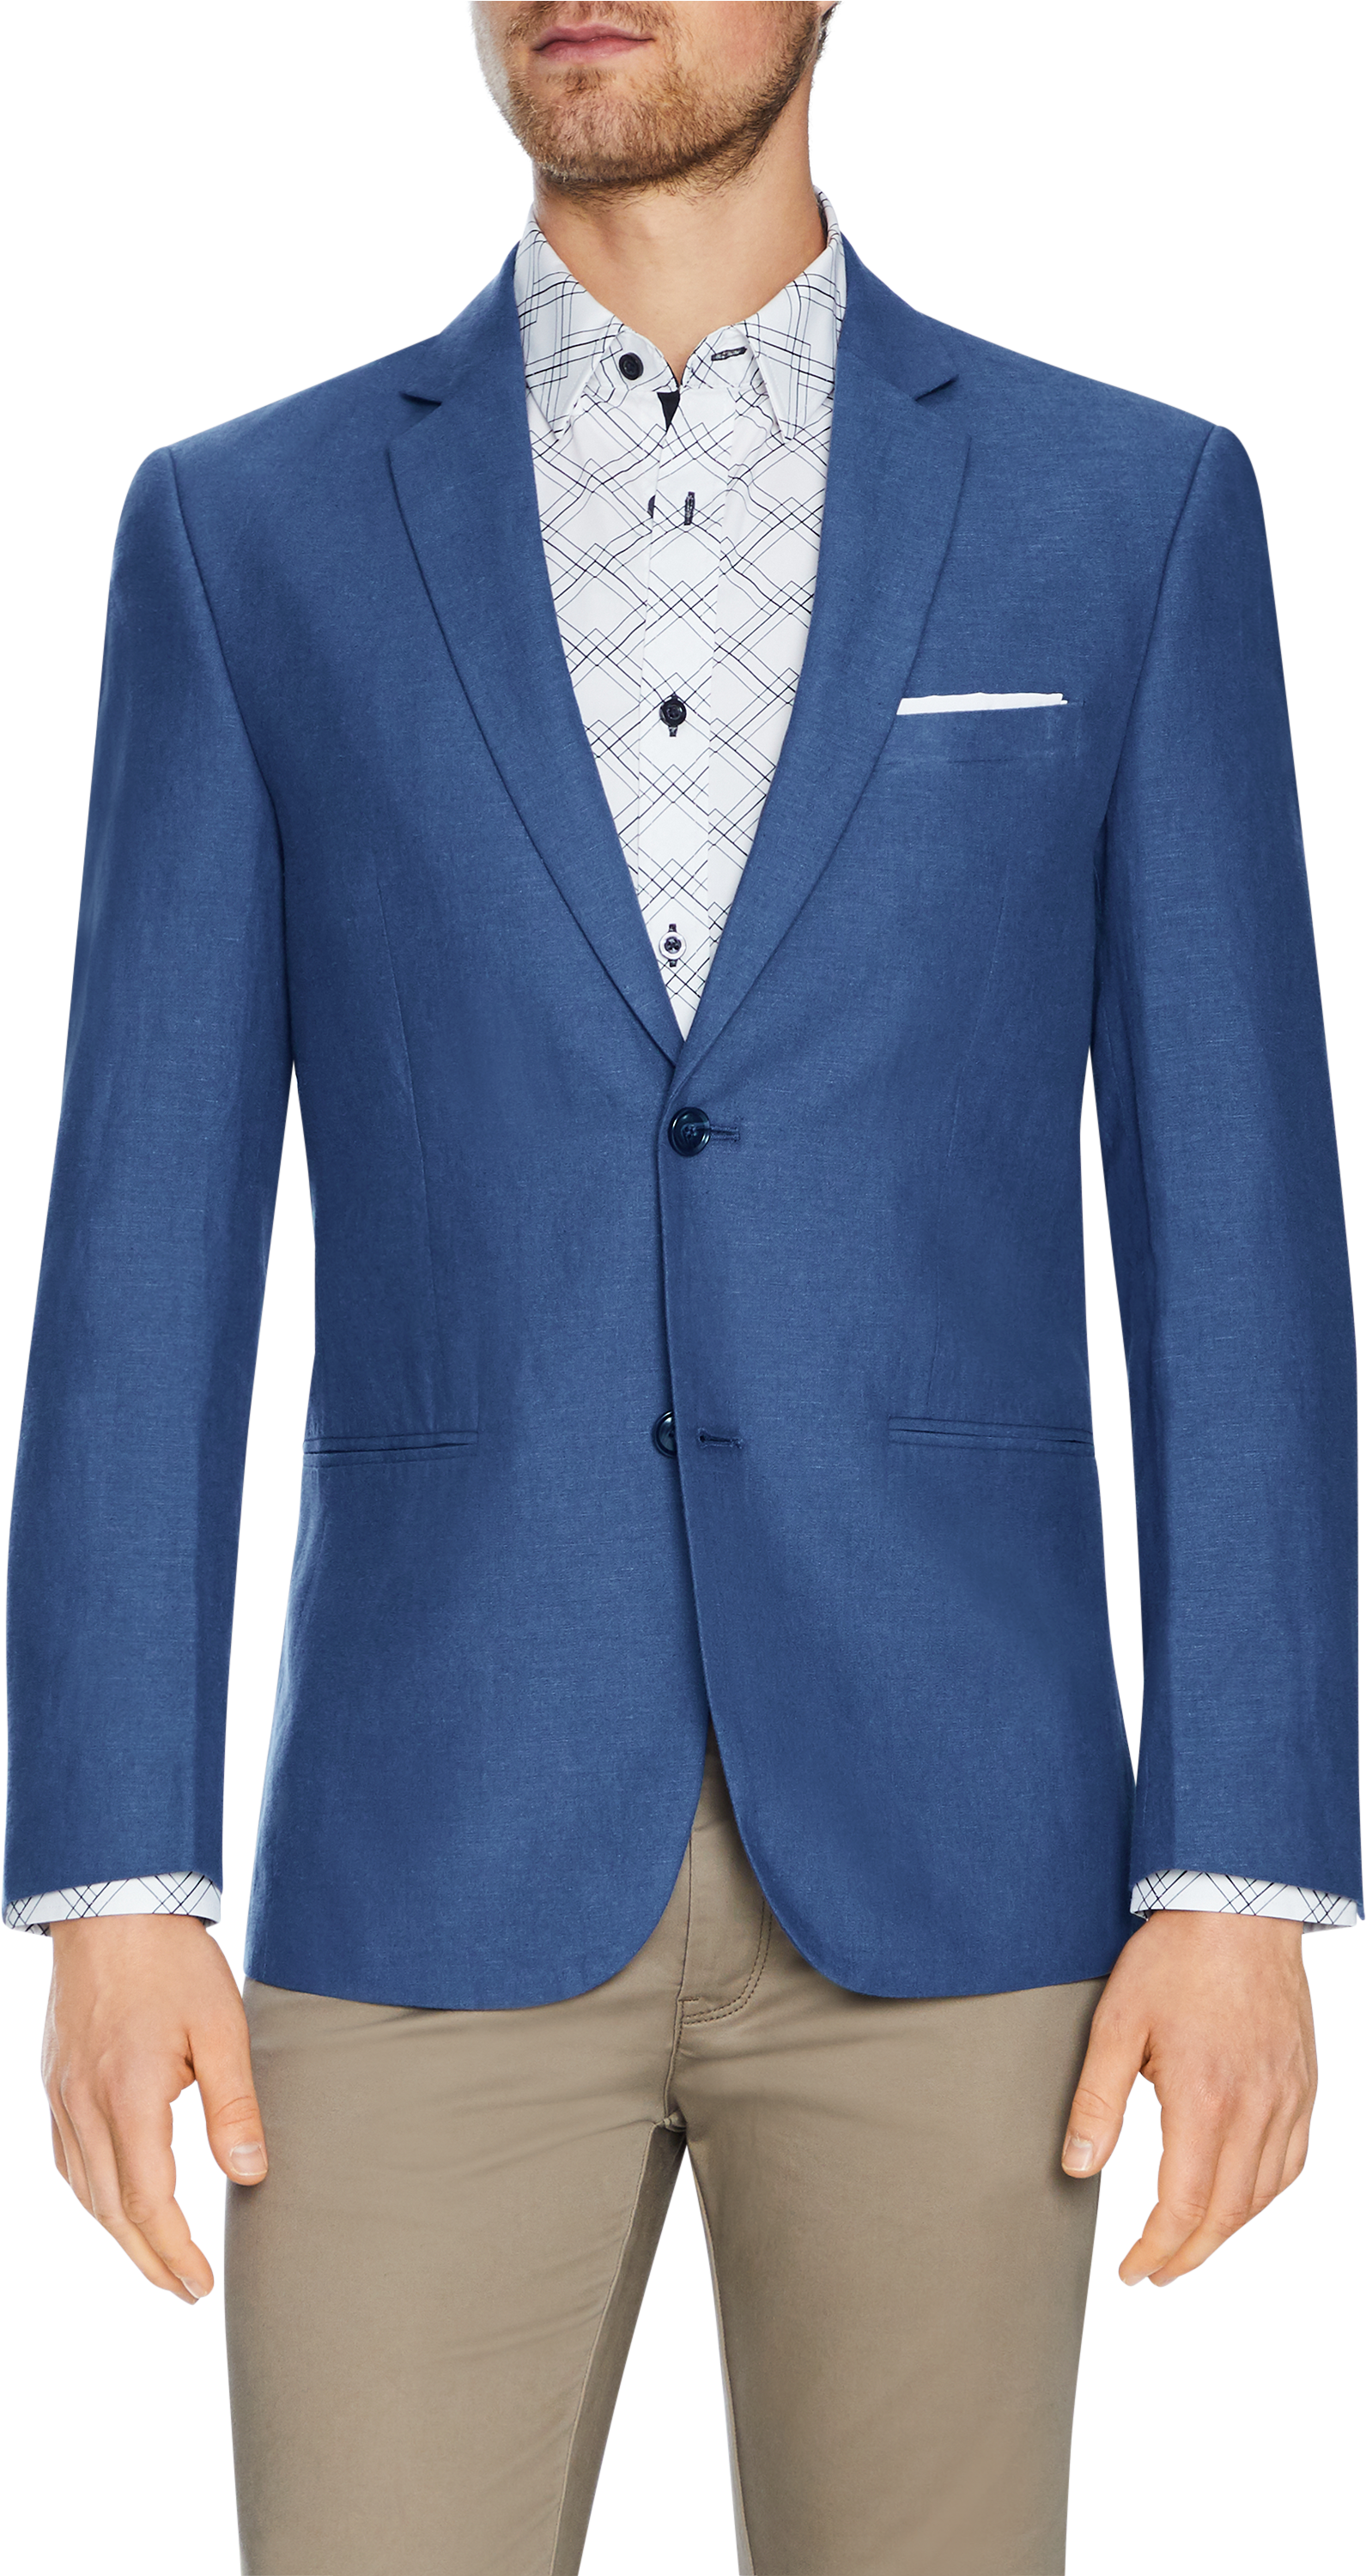 A Man In A Blue Suit